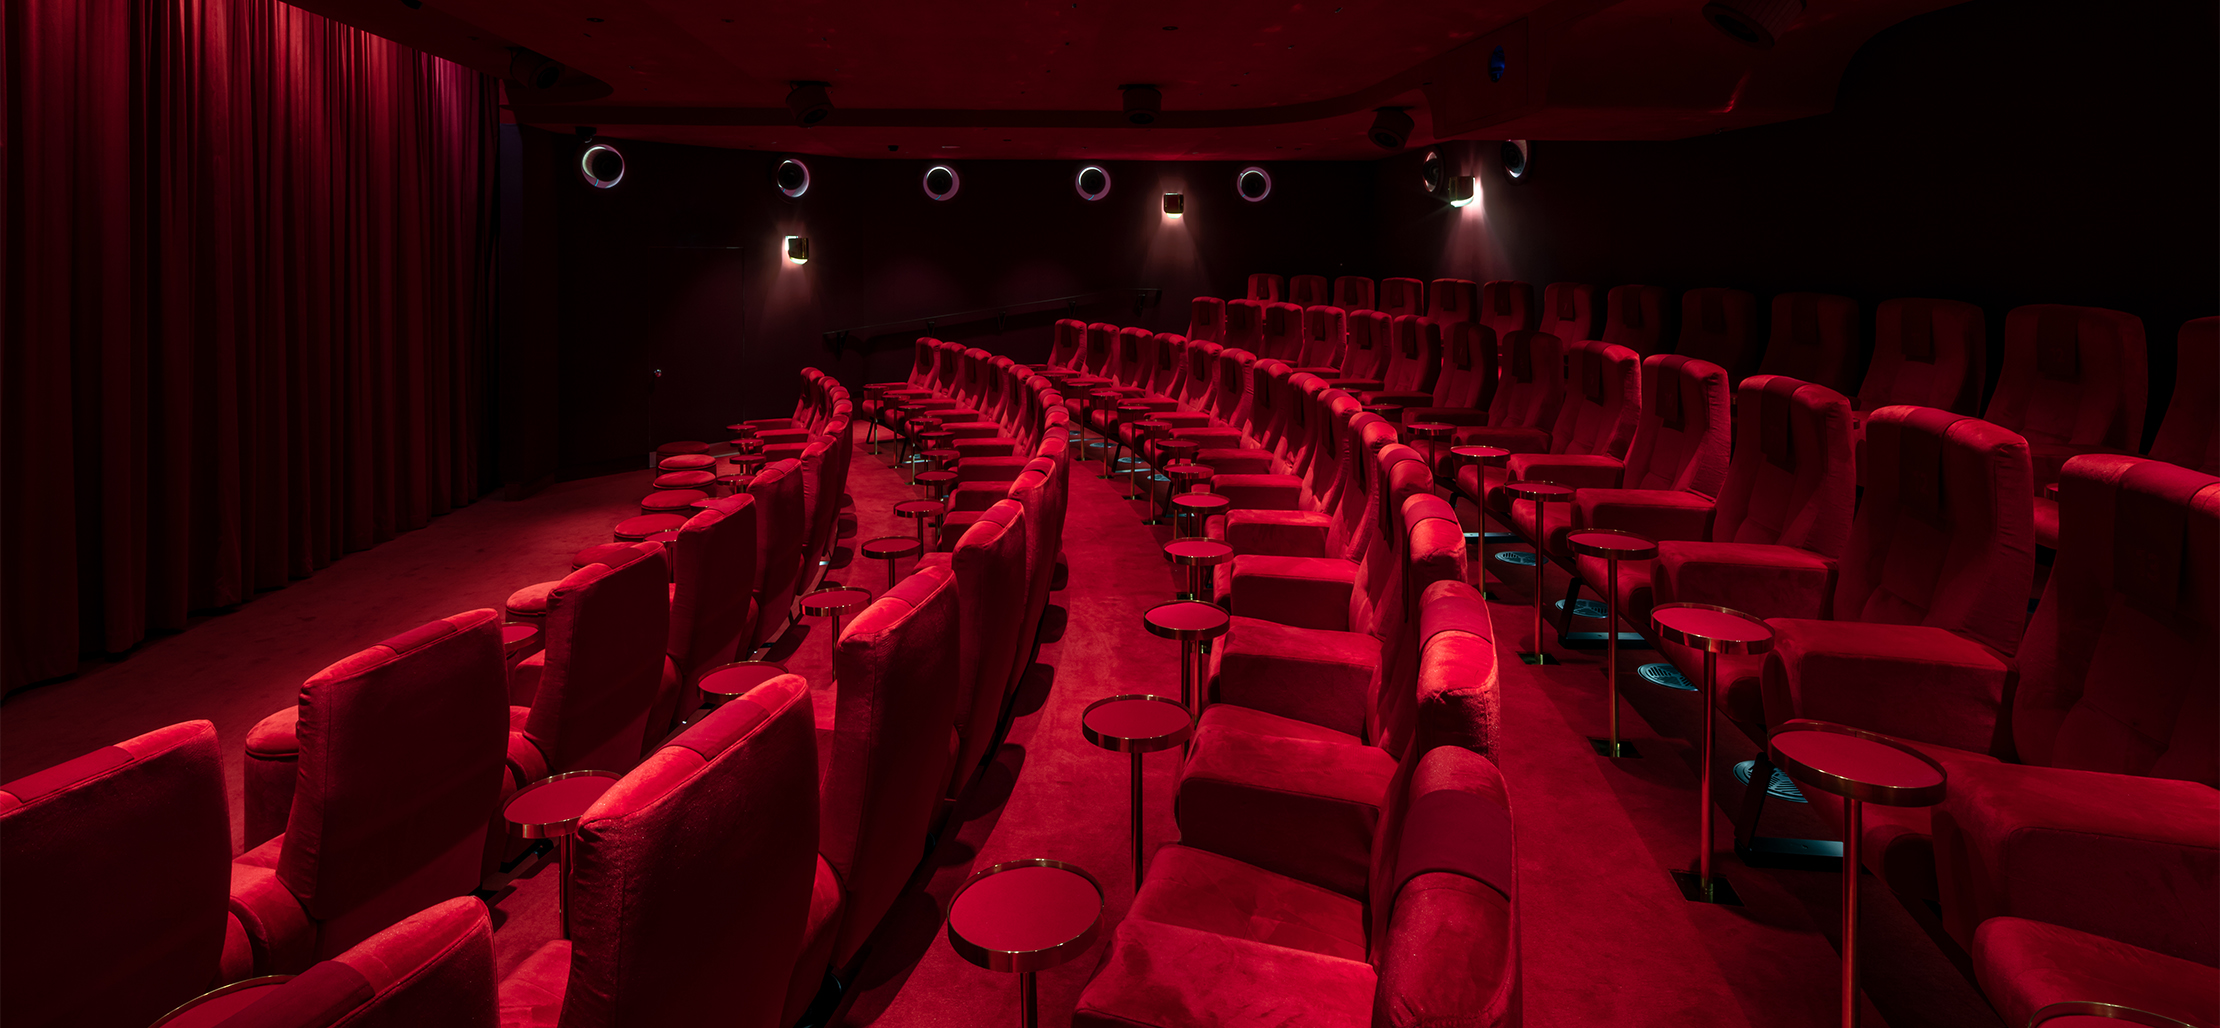 The Cinema at Selfridges Image